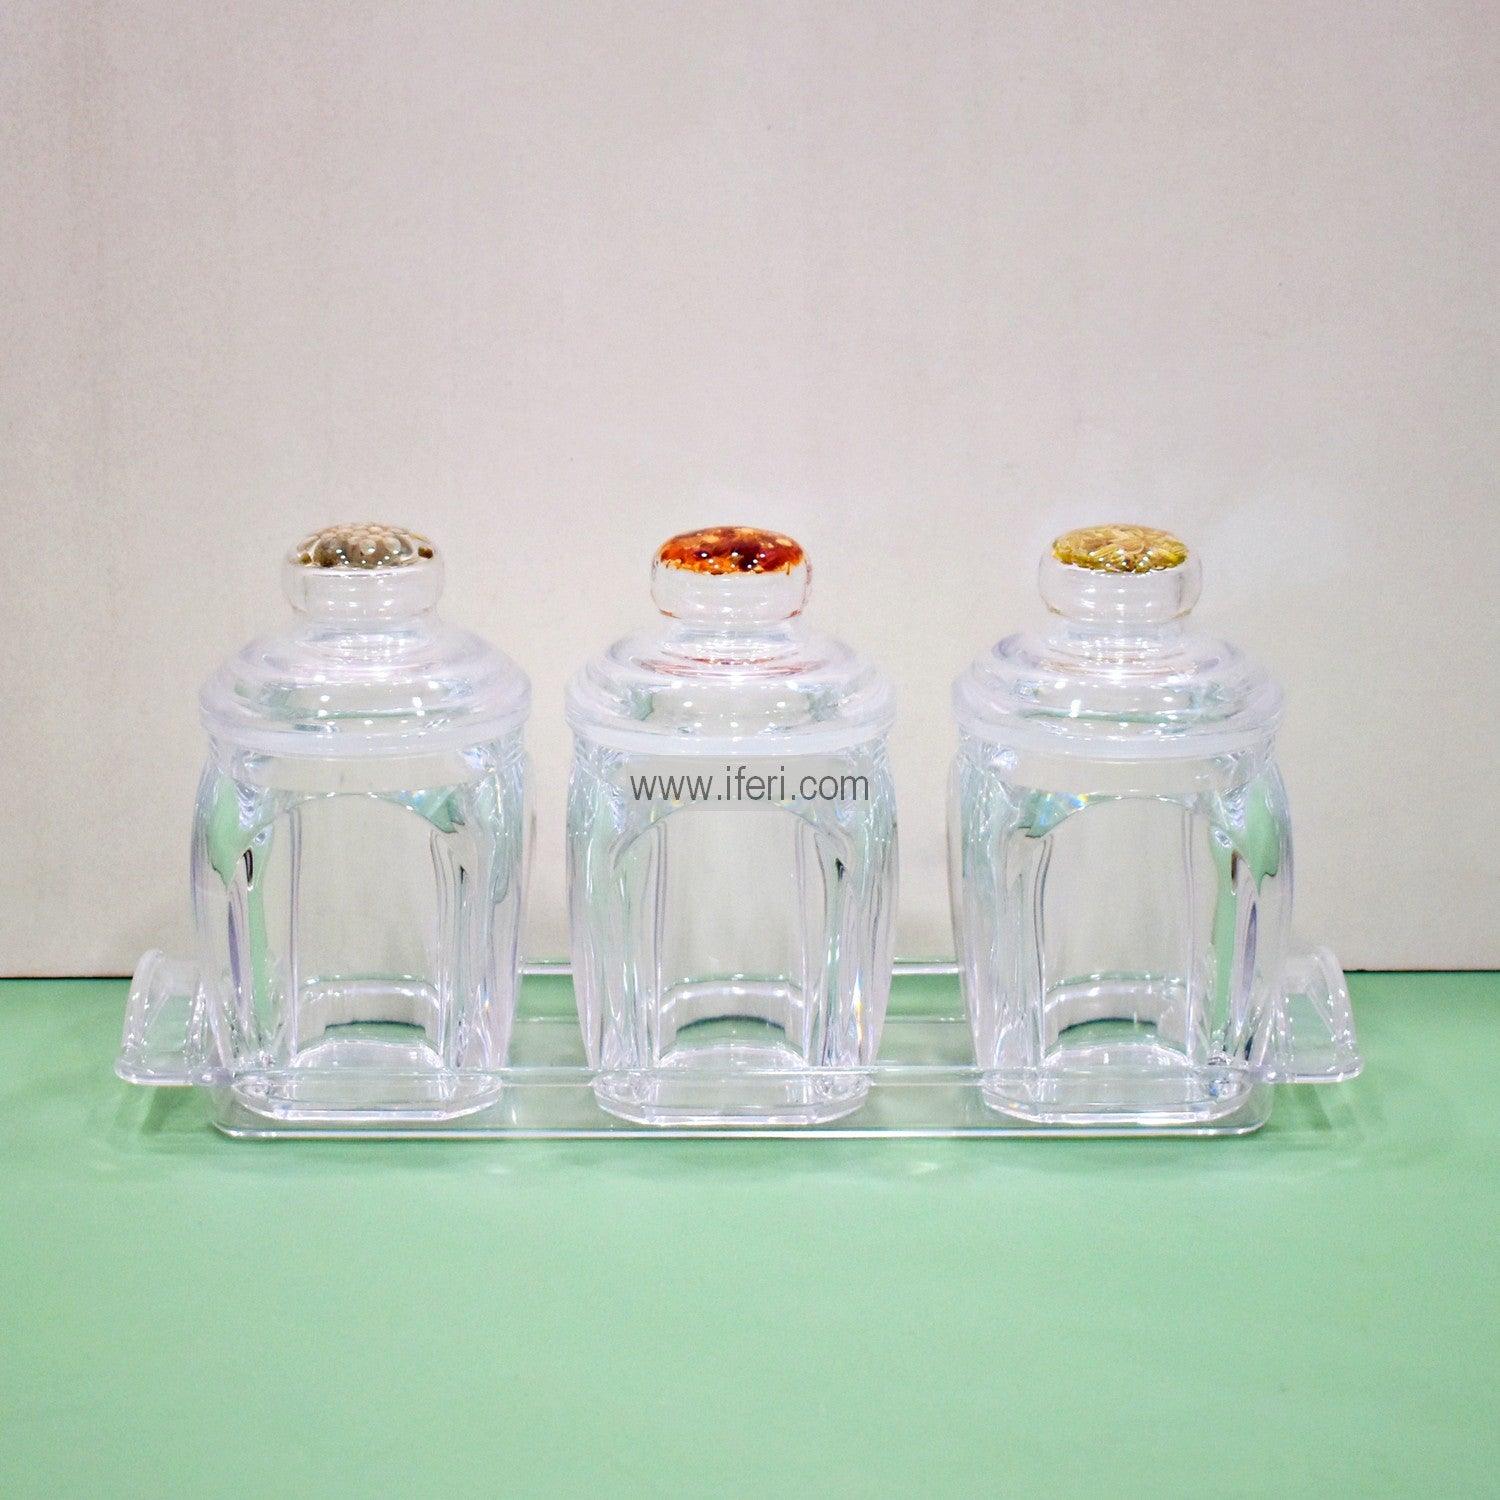 3 Pcs Acrylic Spice Jar with Tray FH0781 Price in Bangladesh - iferi.com